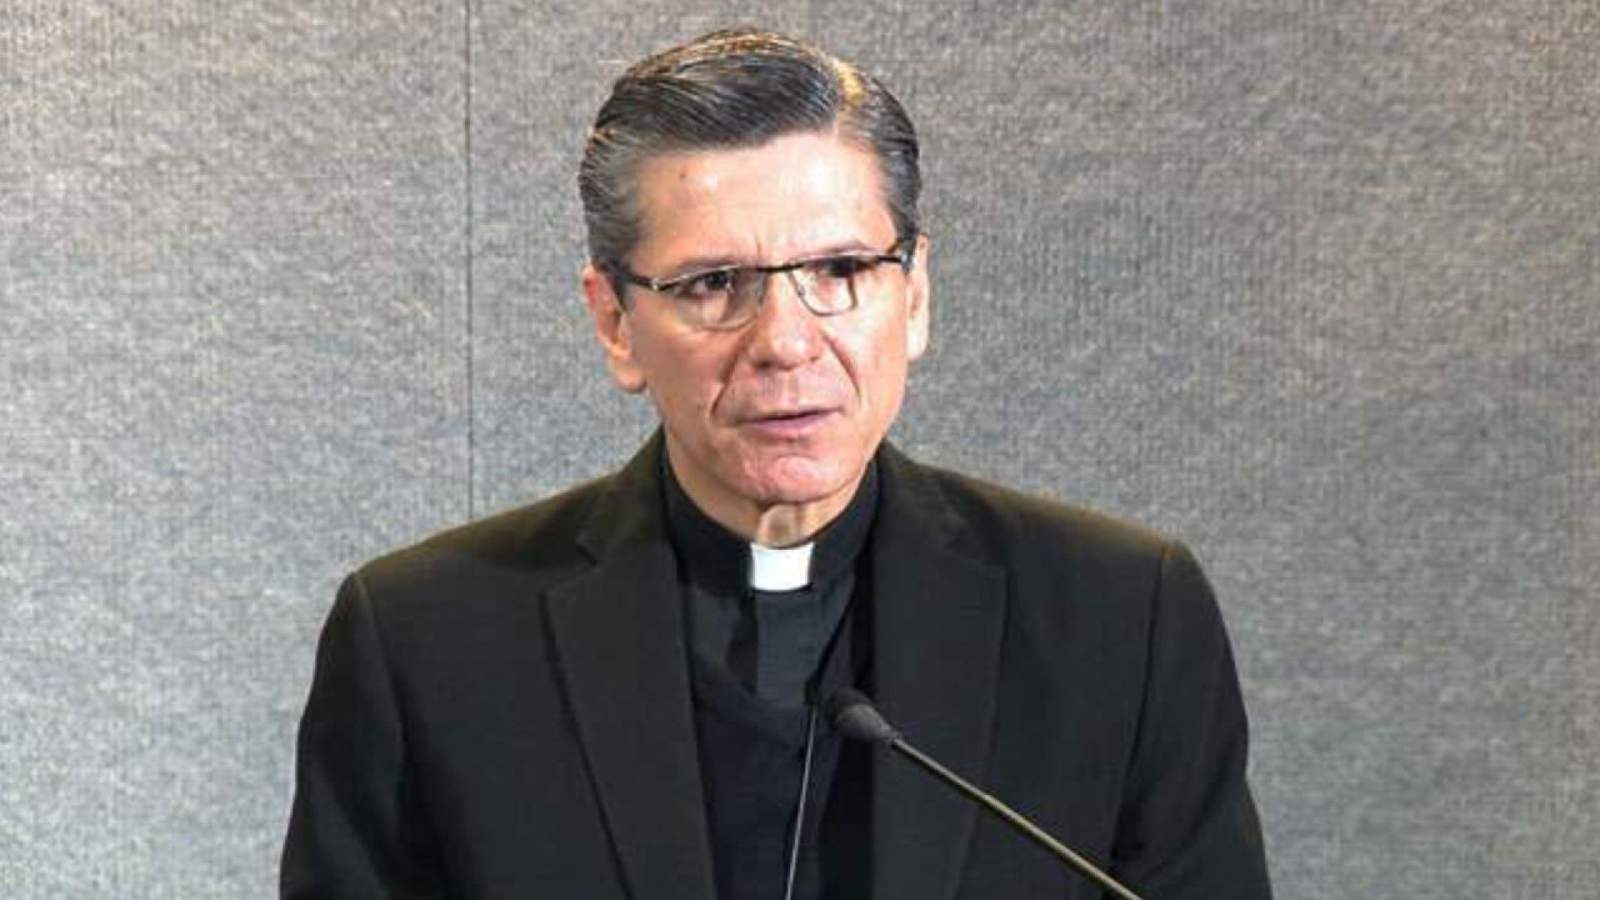 WATCH LIVE: San Antonio archbishop presides over prayer service following violence at US Capitol